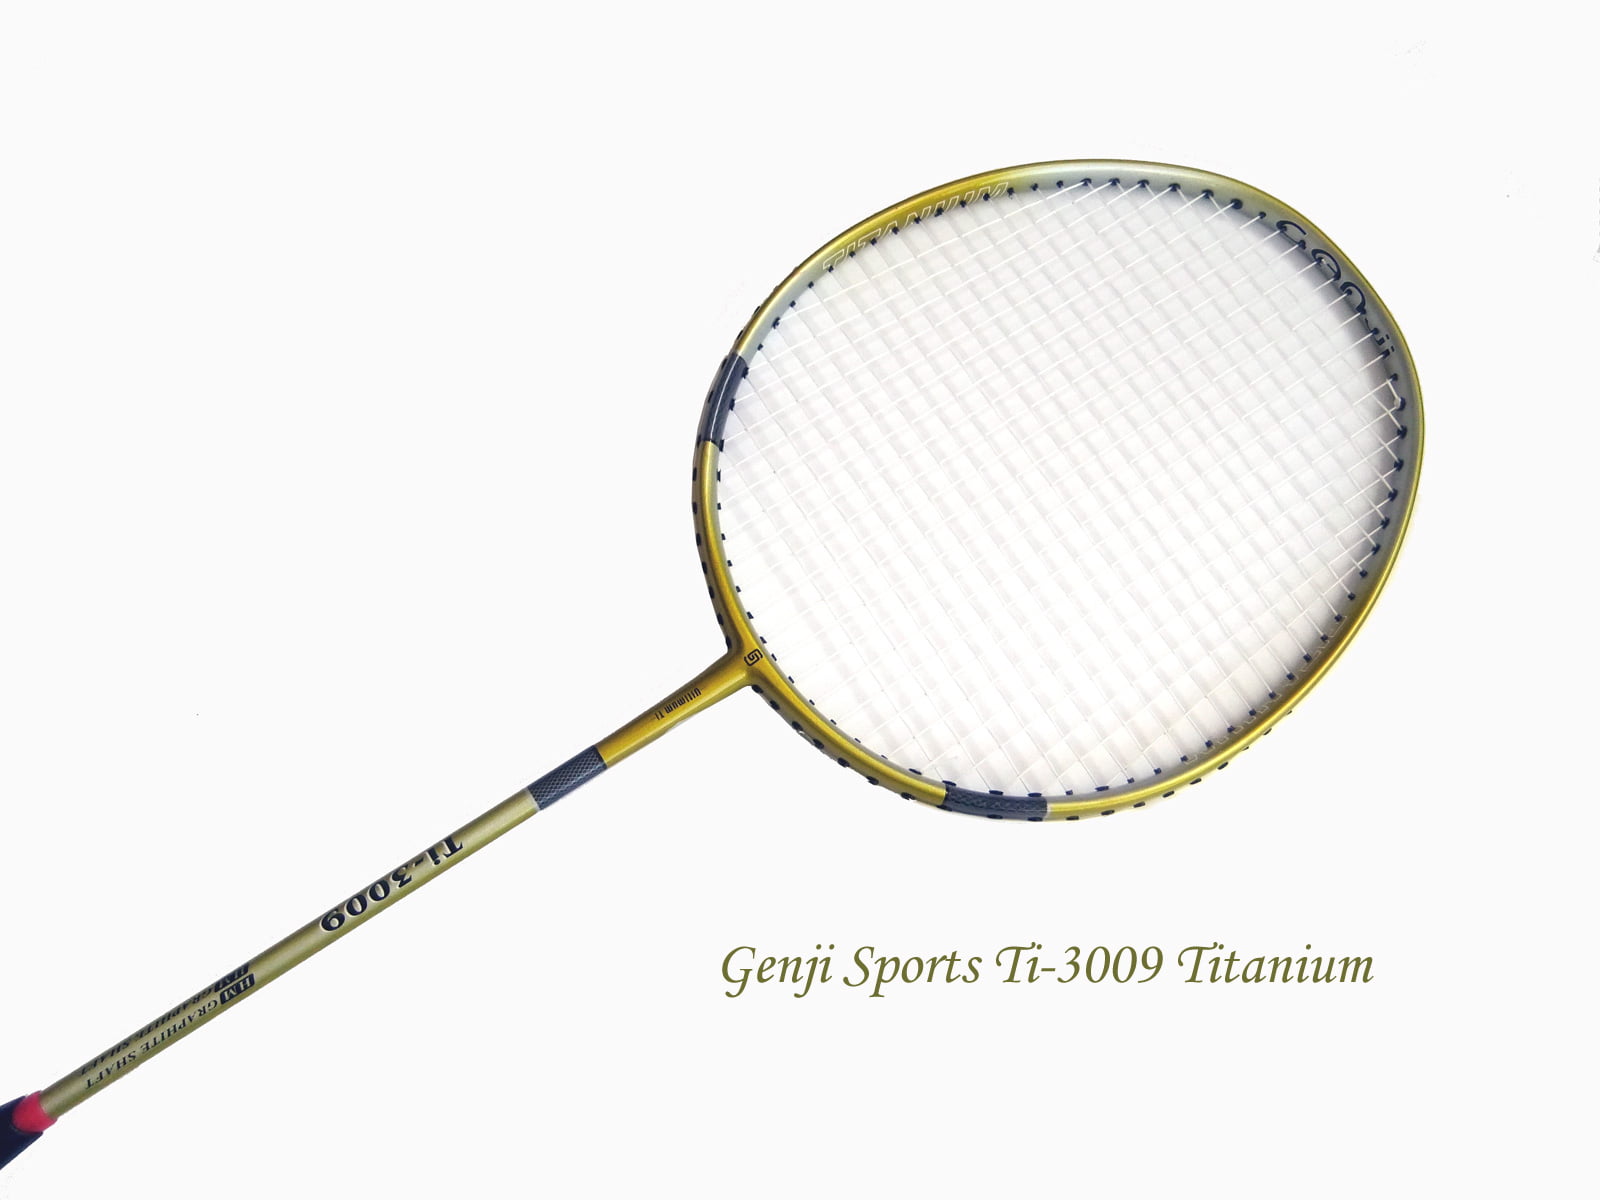 Genji Titanium Badminton Racket Package 